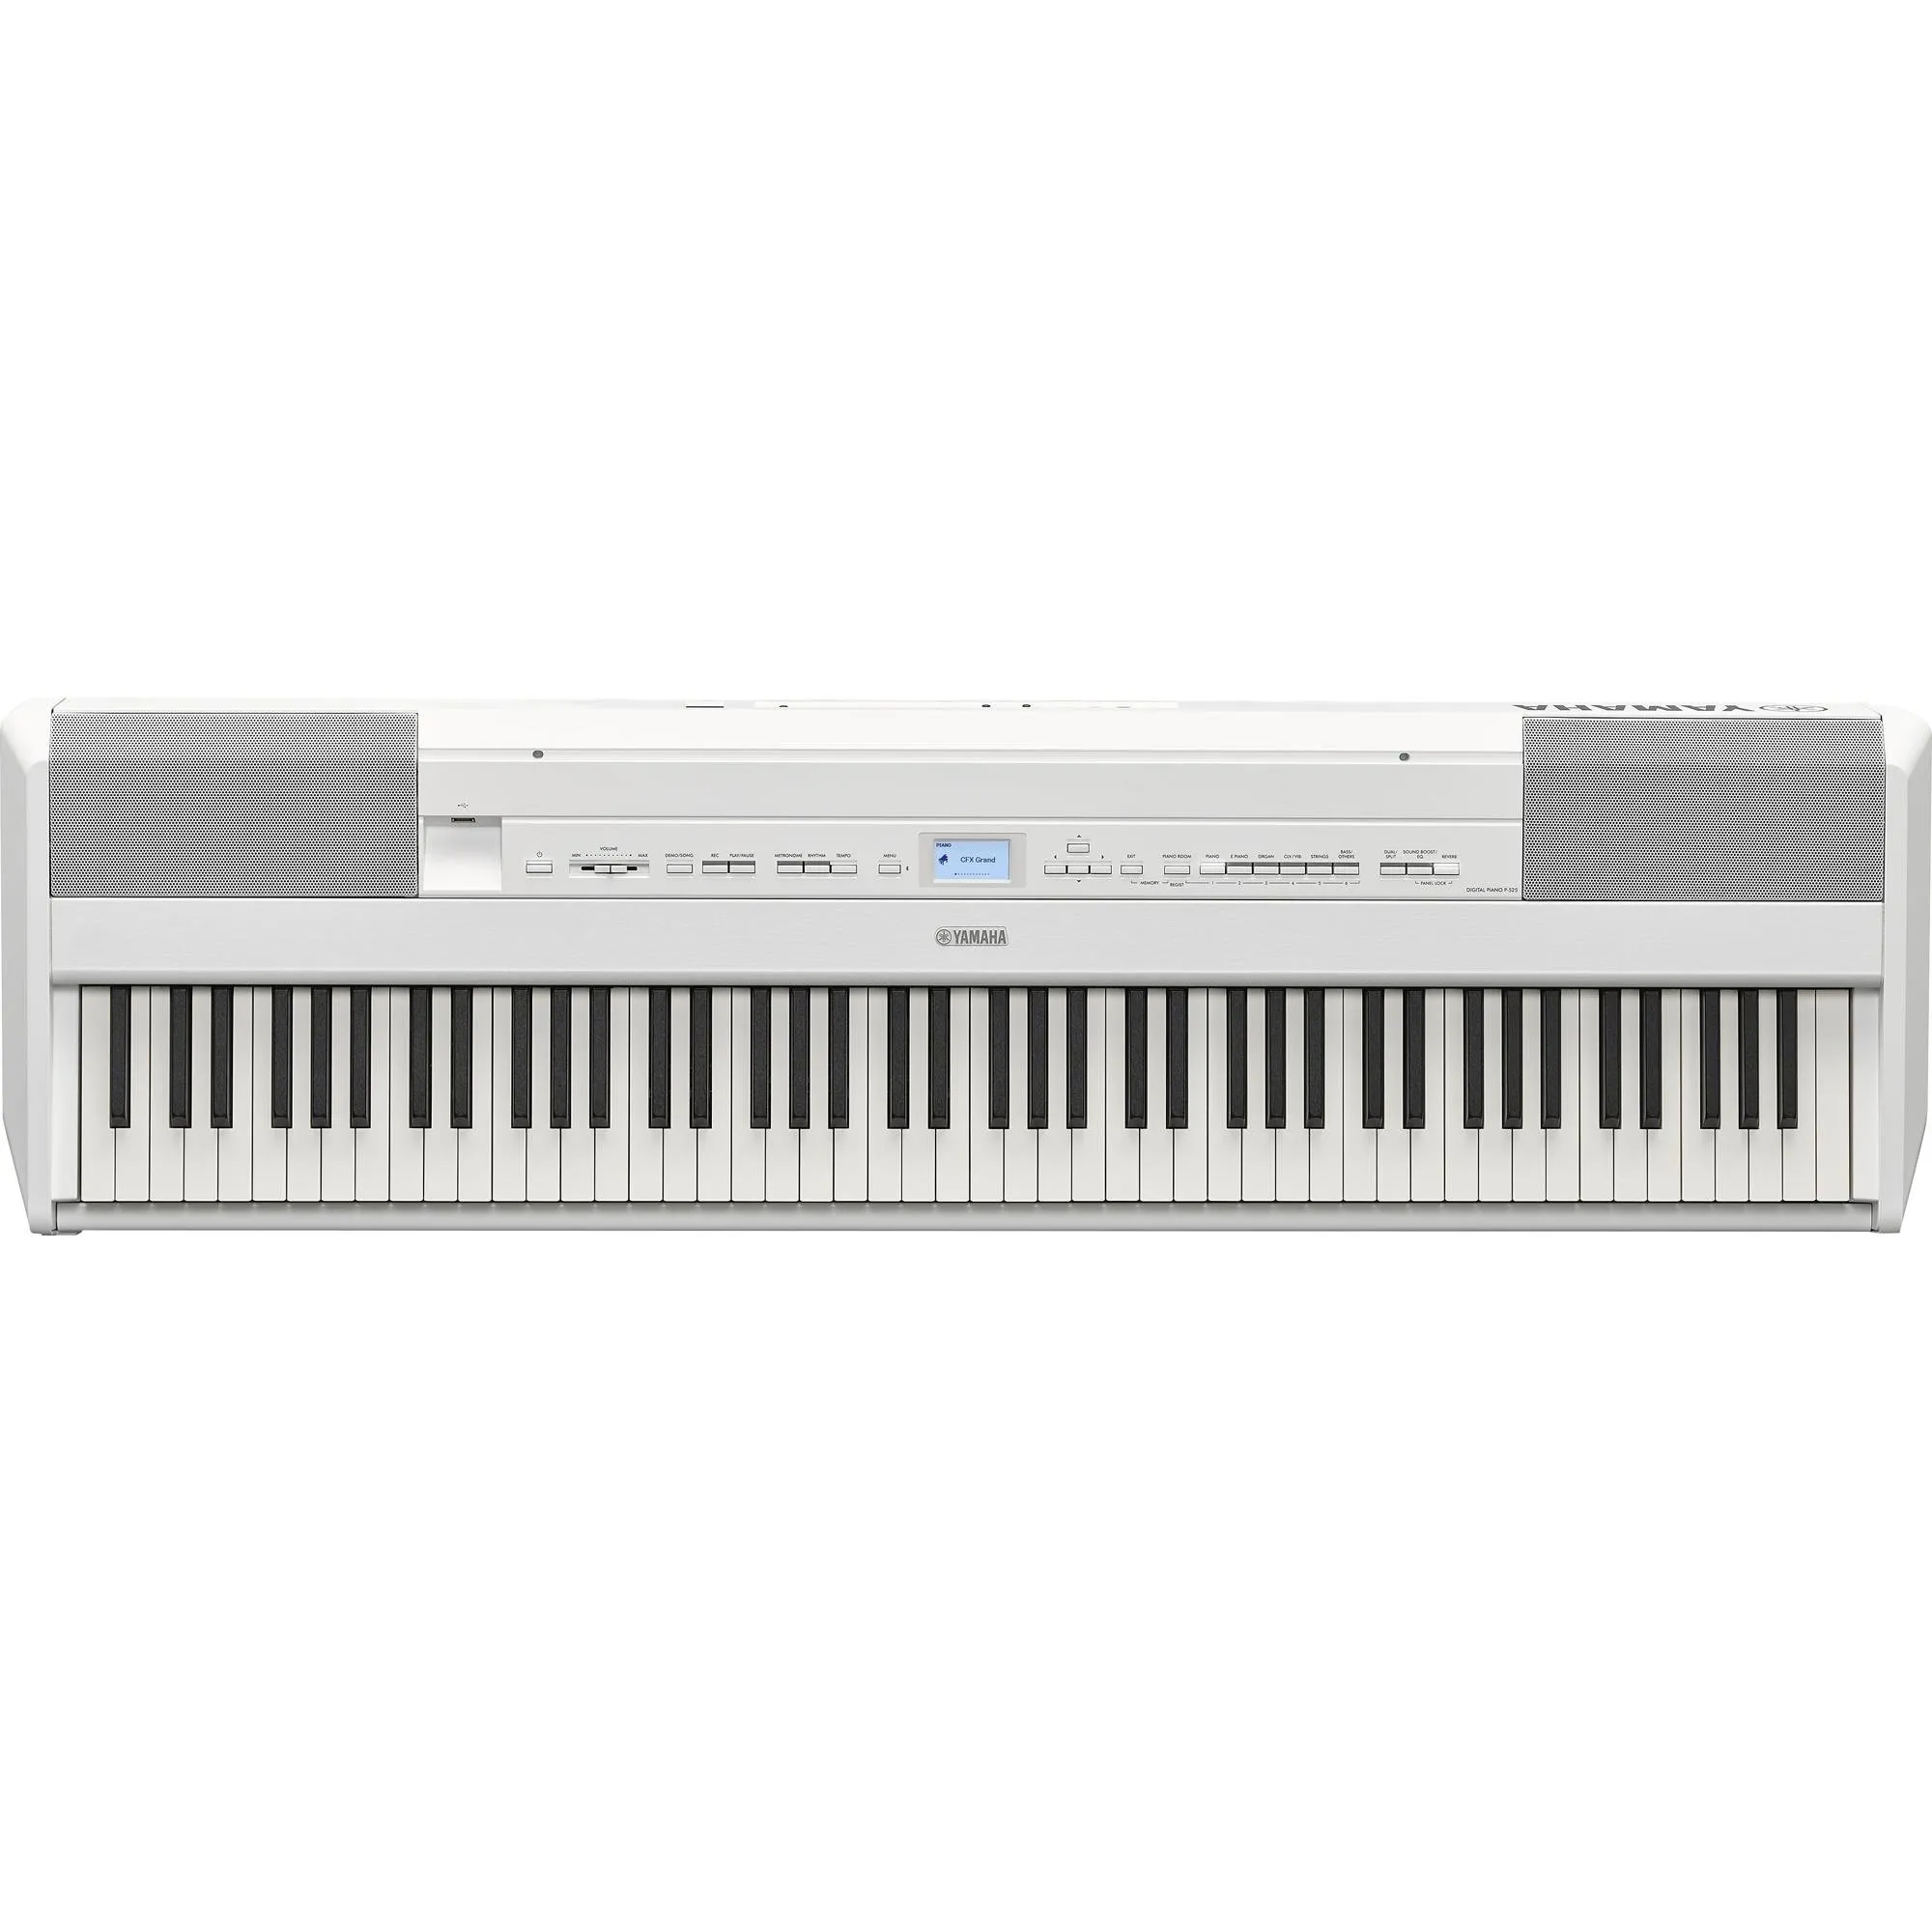 Piano Yamaha P-525 Digital Branco (82908)